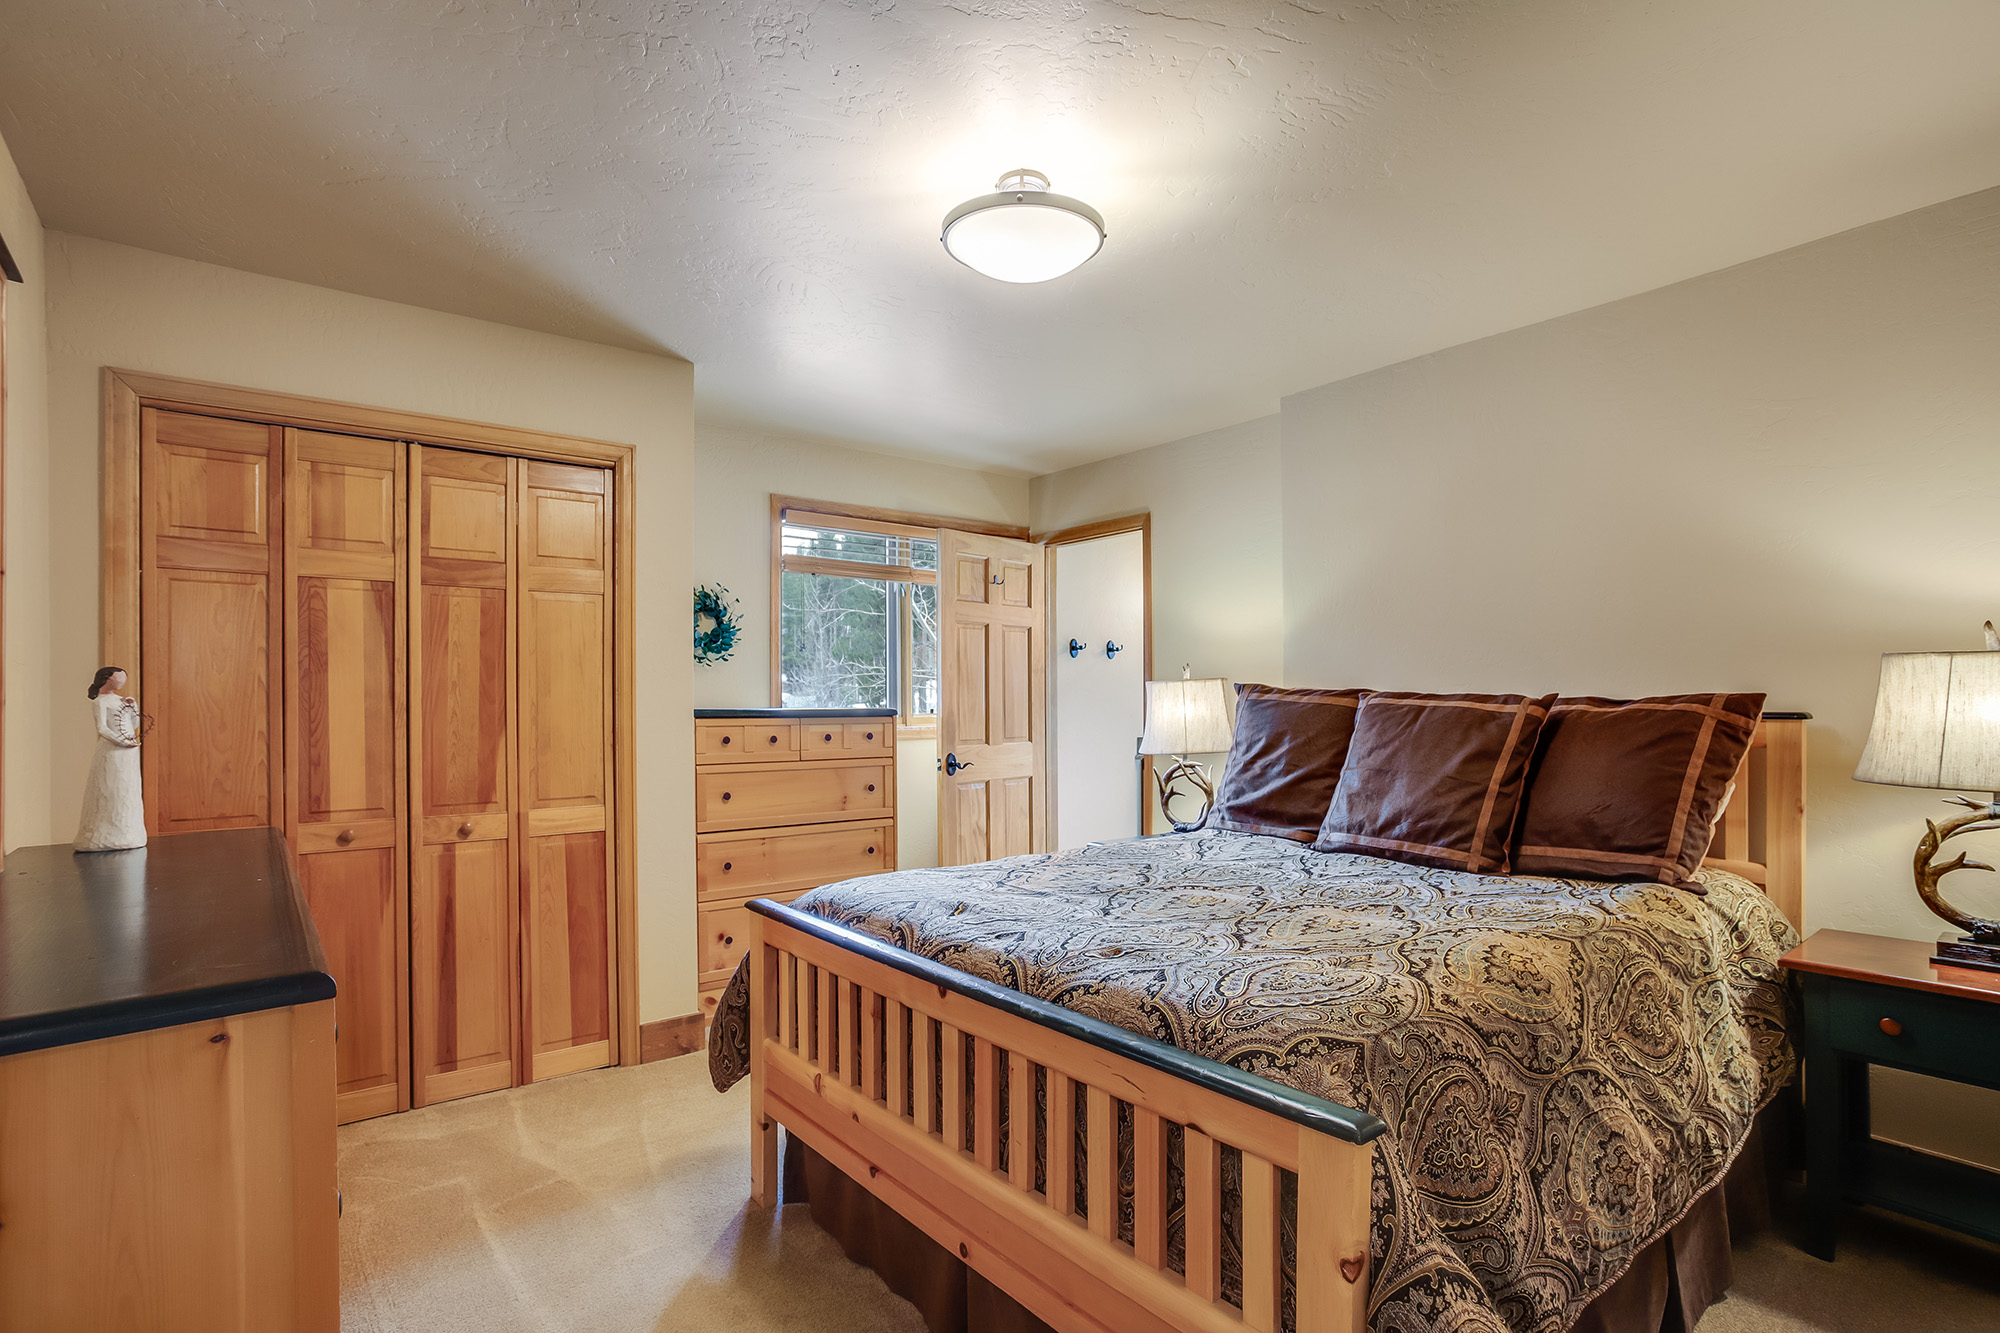 King bedroom - Friendly Fox Chalet - Breckenridge vacation rental